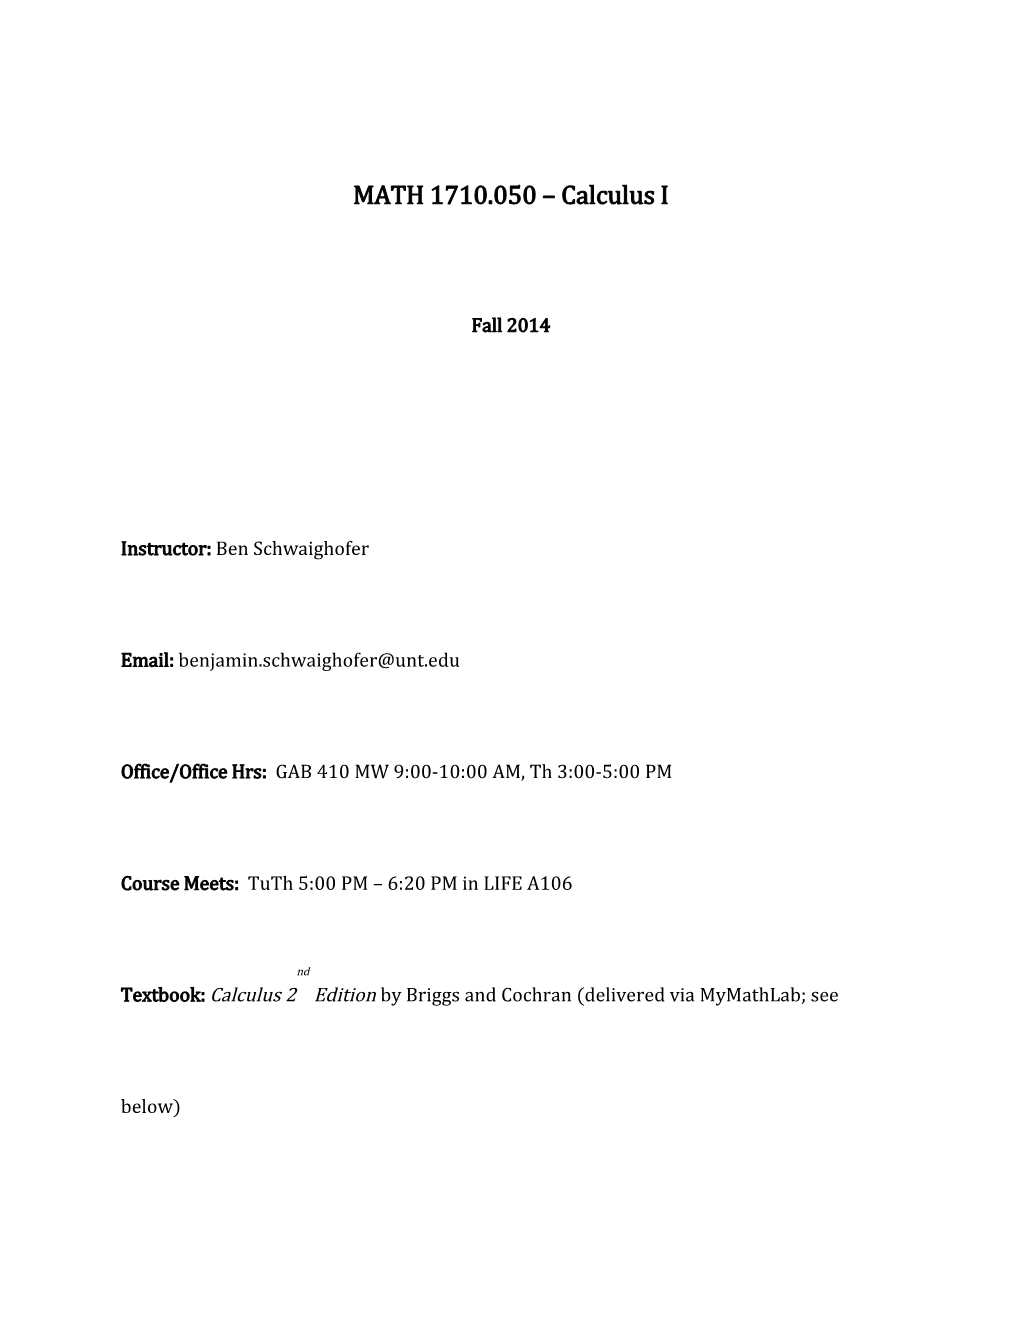 MATH 1710.050 Calculus I